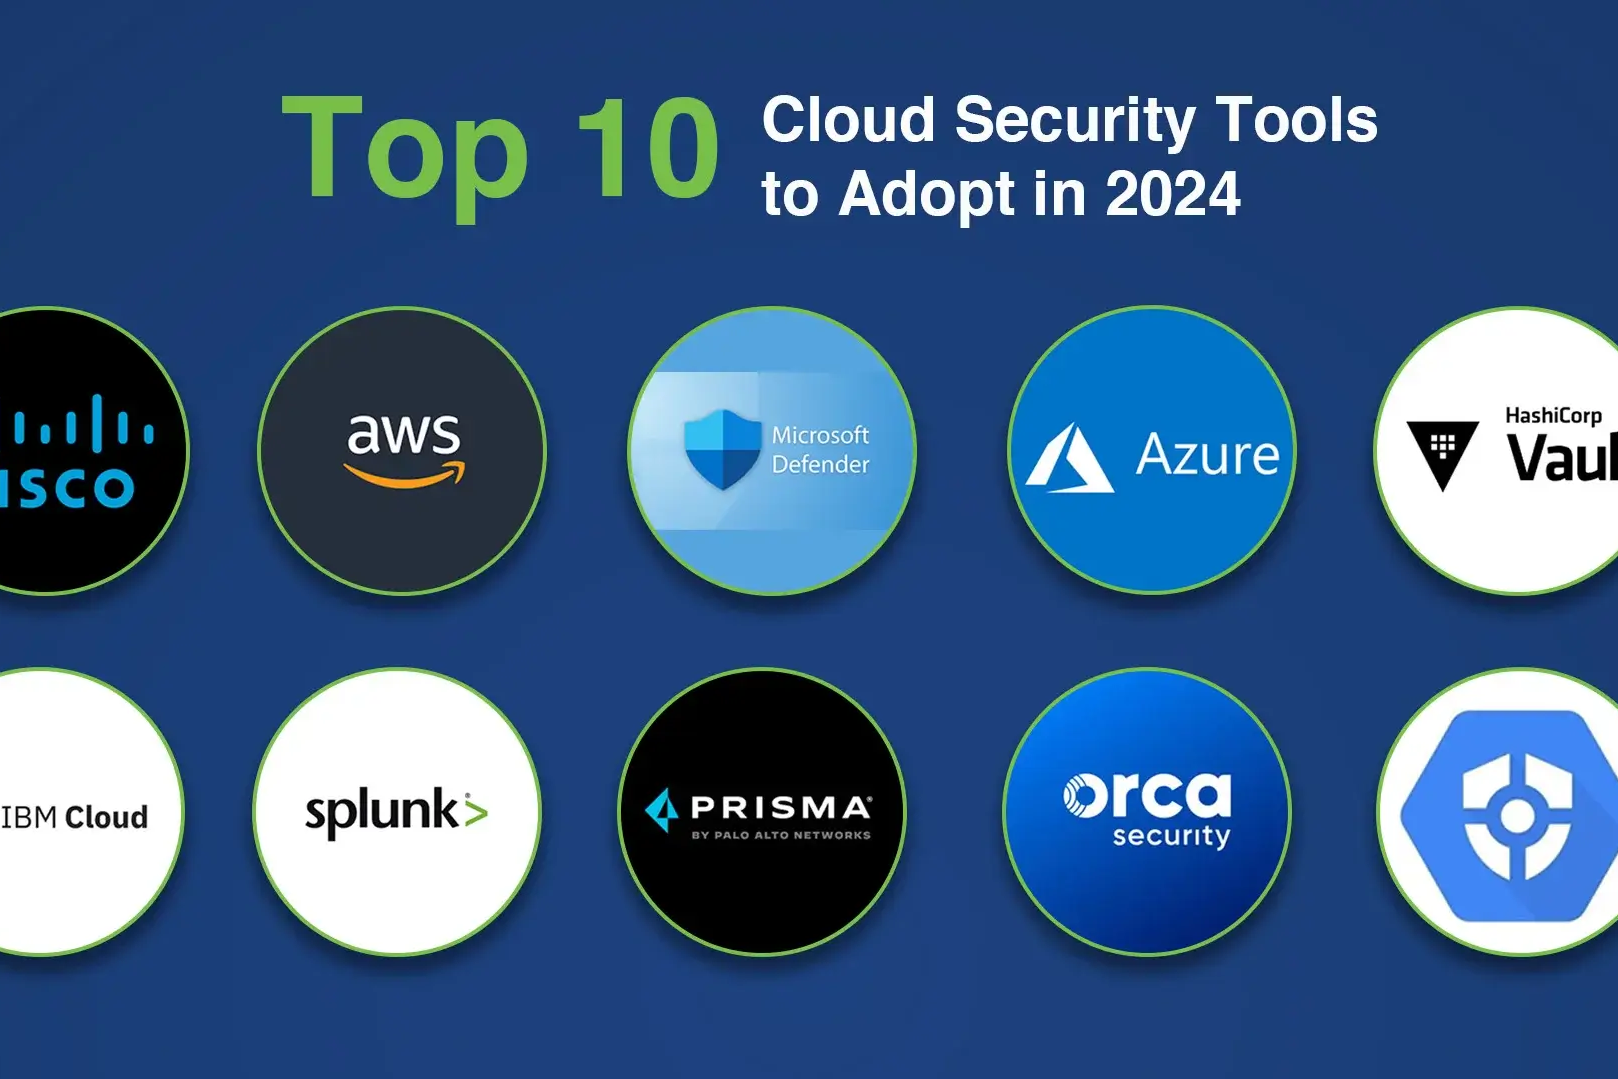 Cloud Security tools